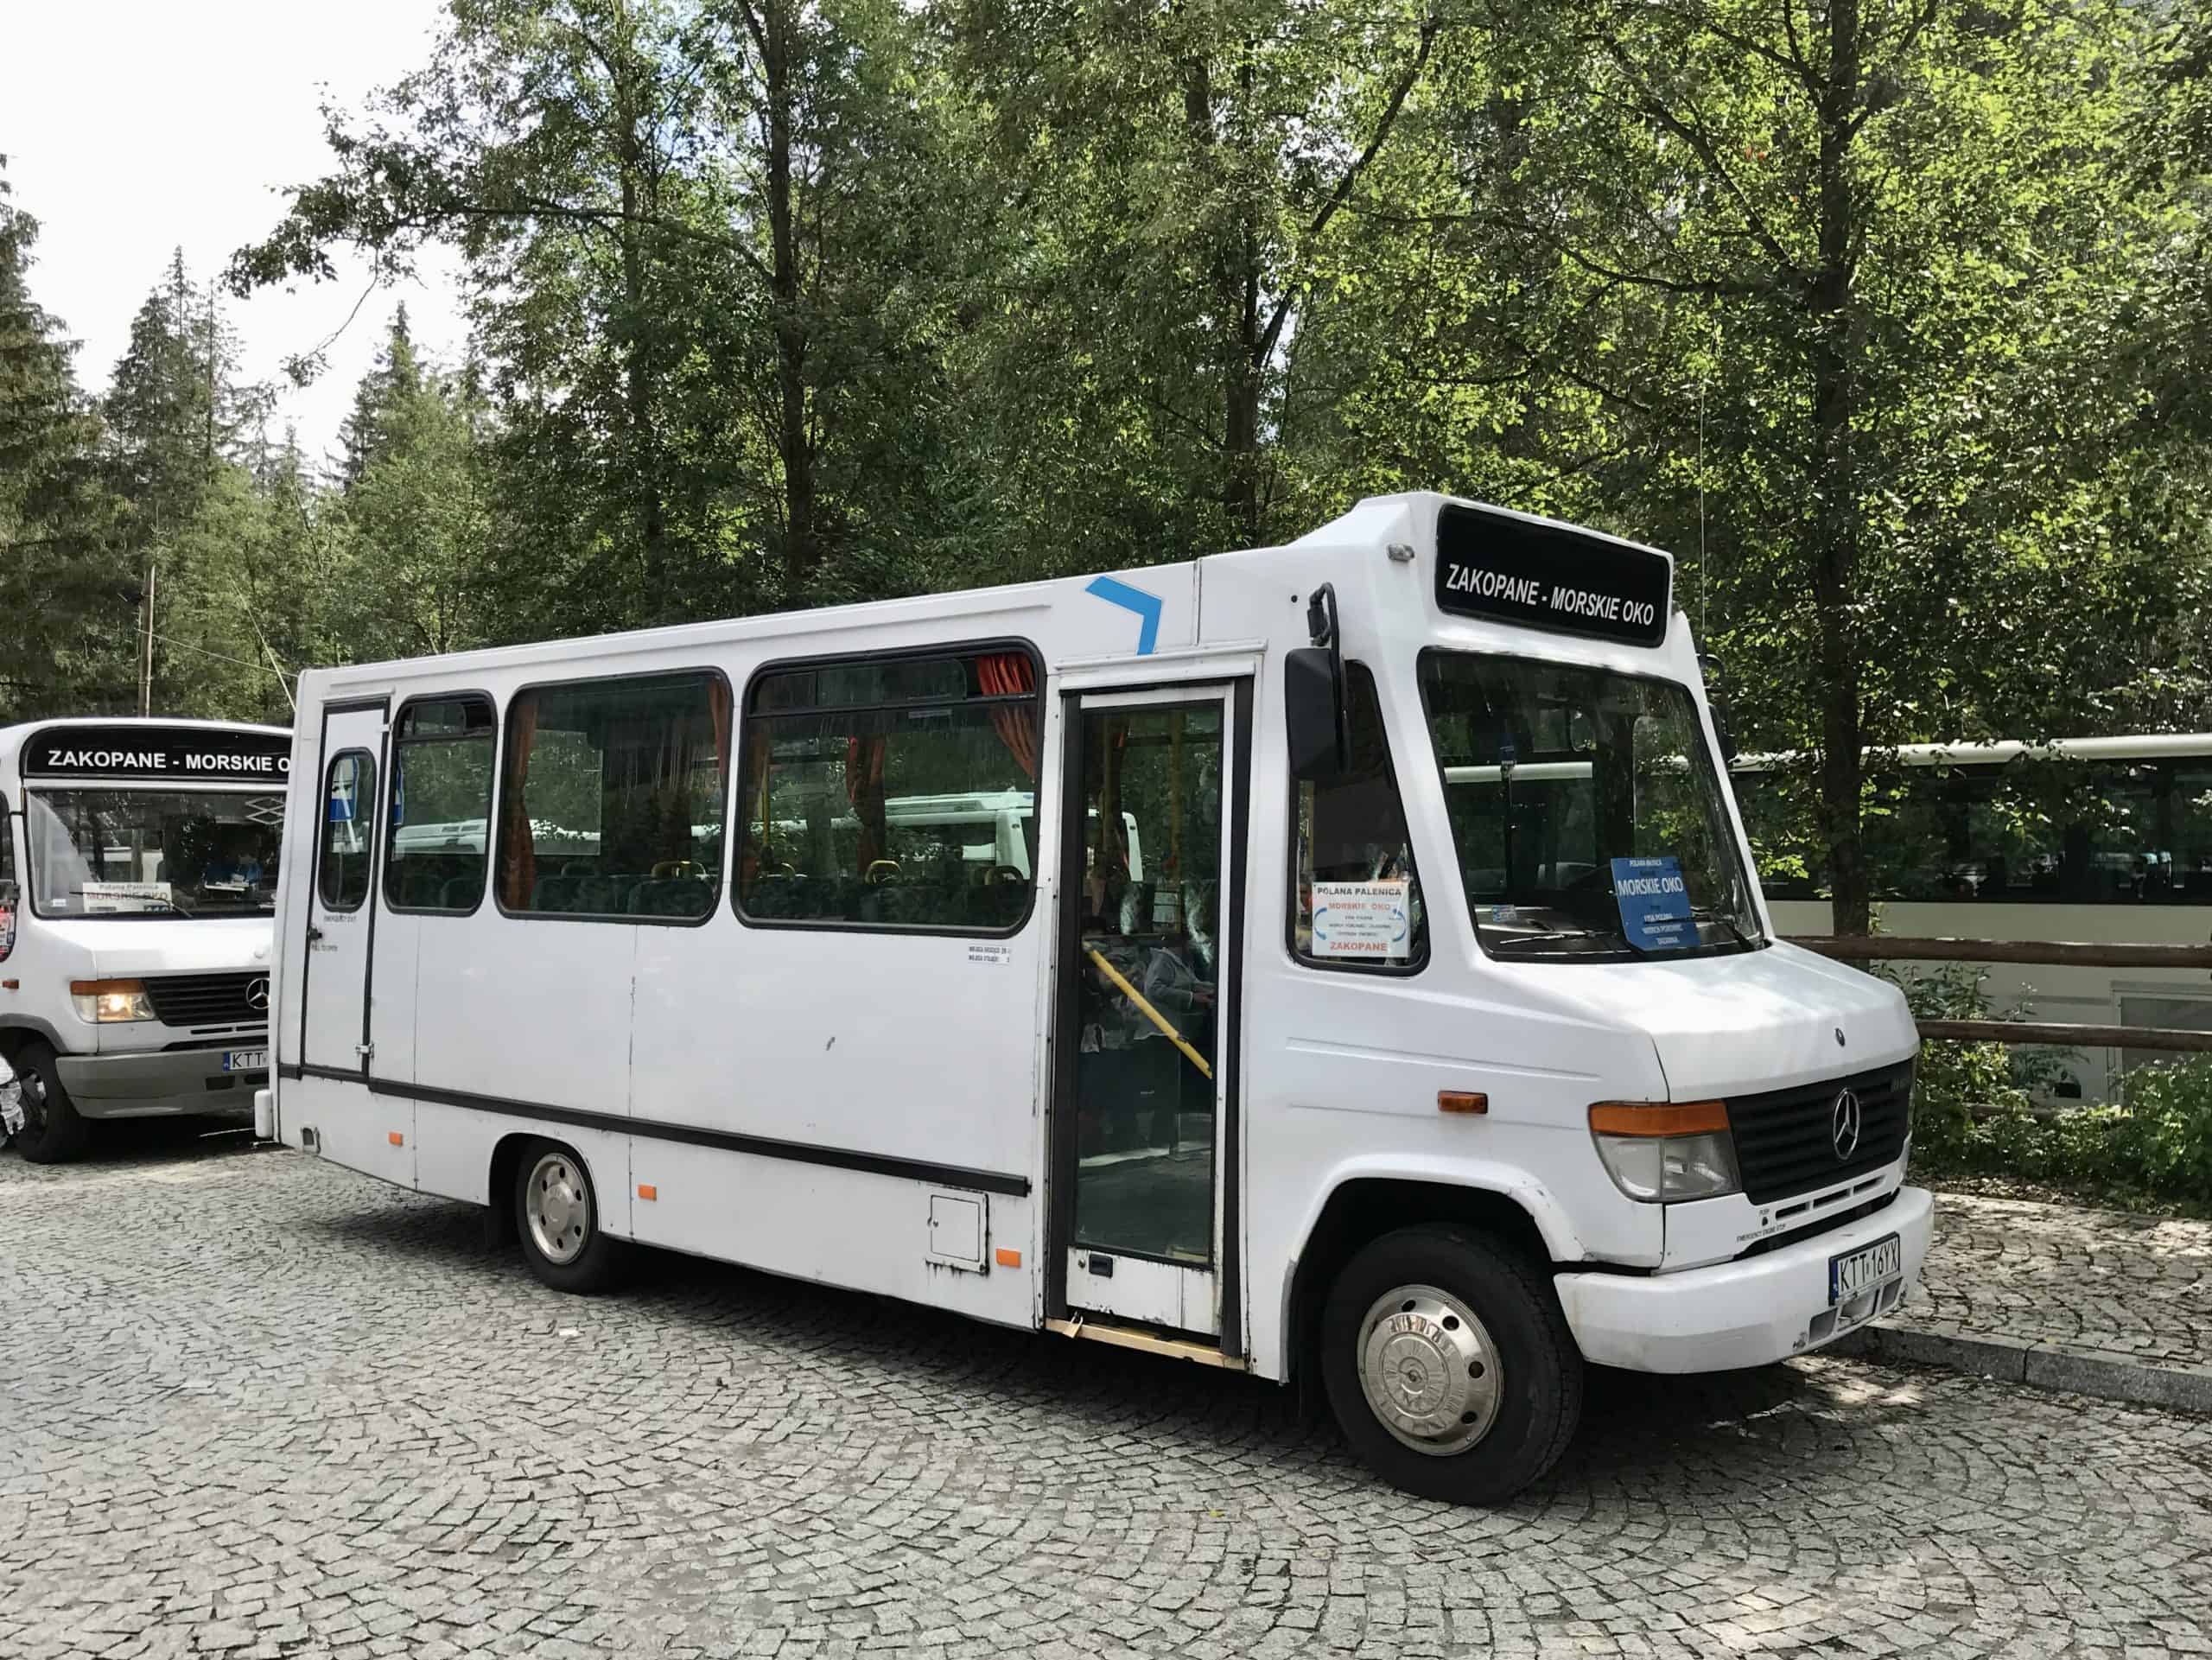 White mini buses will take you from Zakopane to the start of the Morskie Oko hike